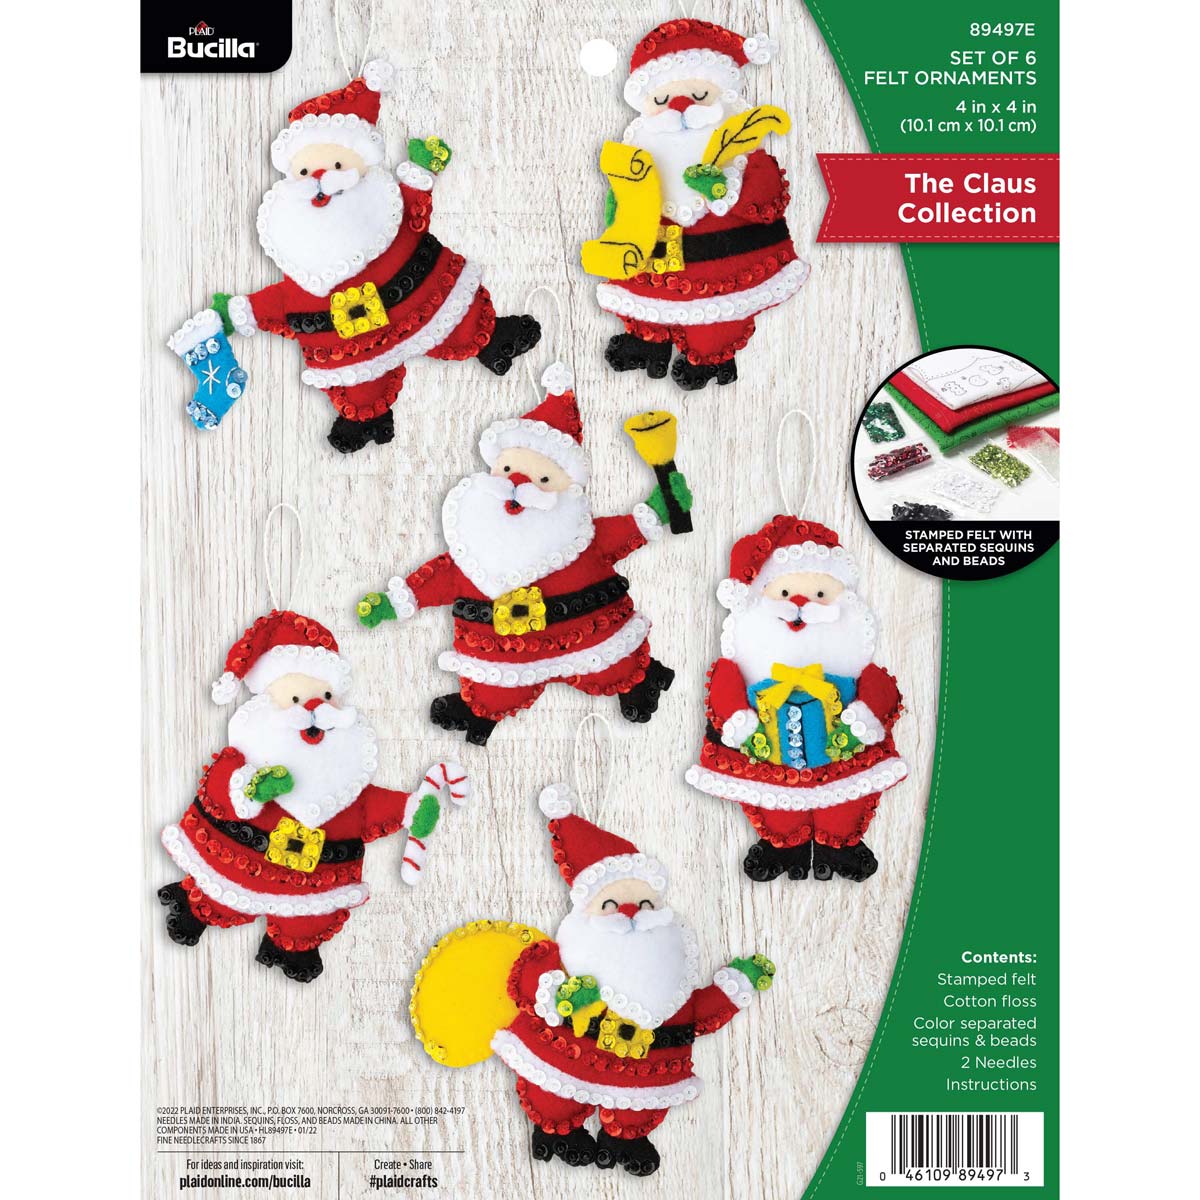 Bucilla ® Seasonal - Felt - Ornament Kits - The Claus Collection - 89497E - Beadery Products